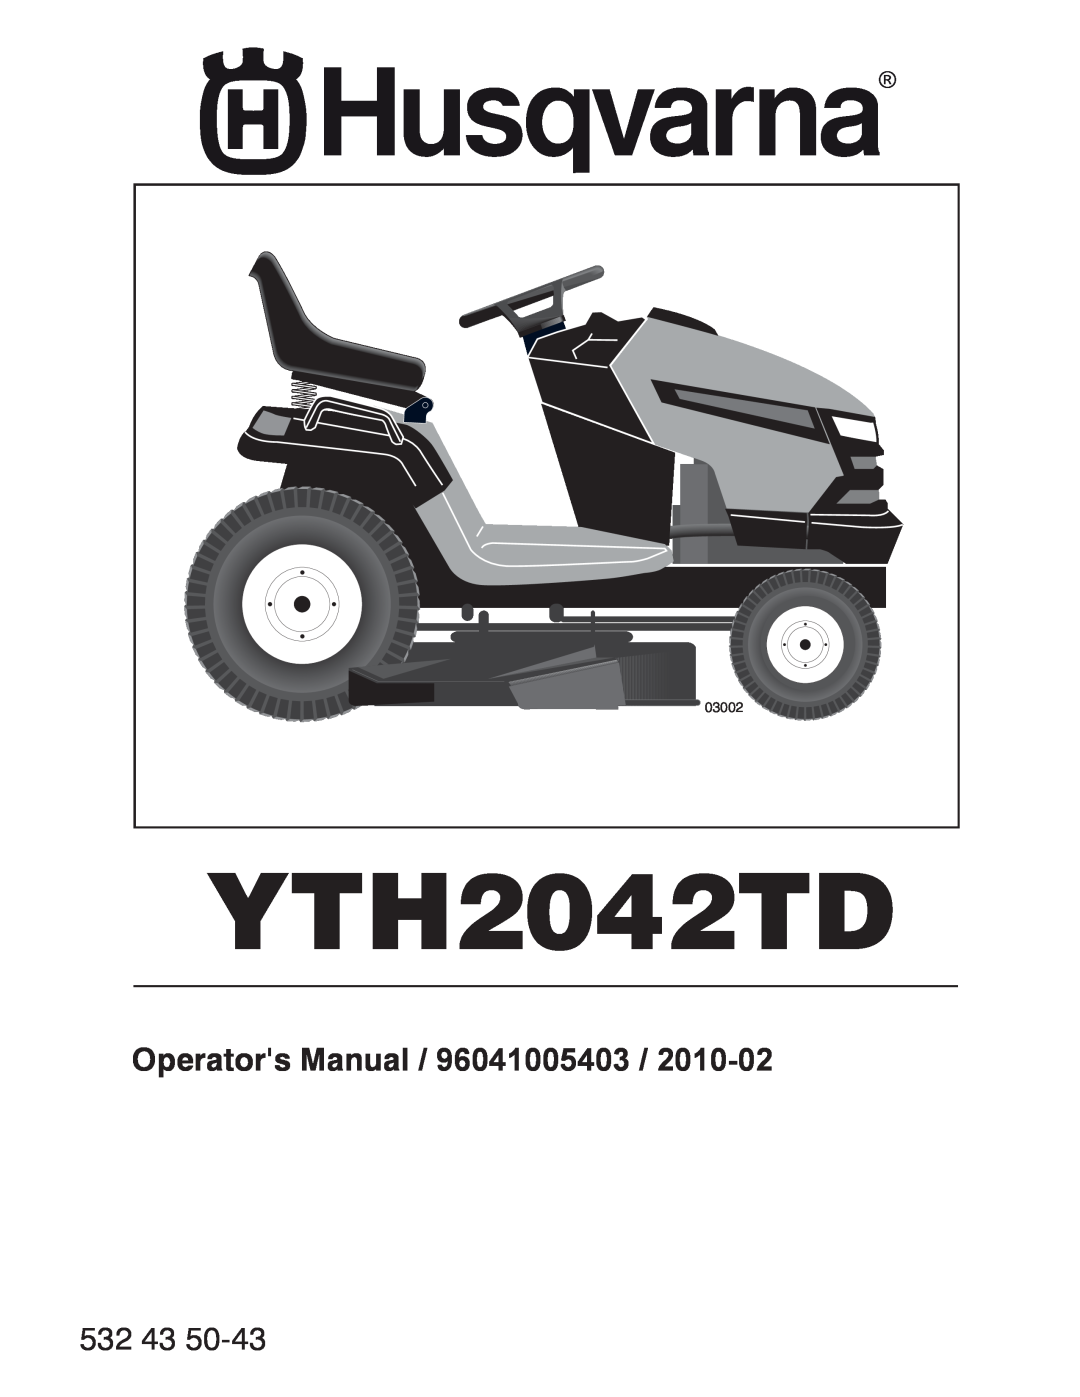 Husqvarna YTH2042TD manual Operators Manual, 532 43, 03002 